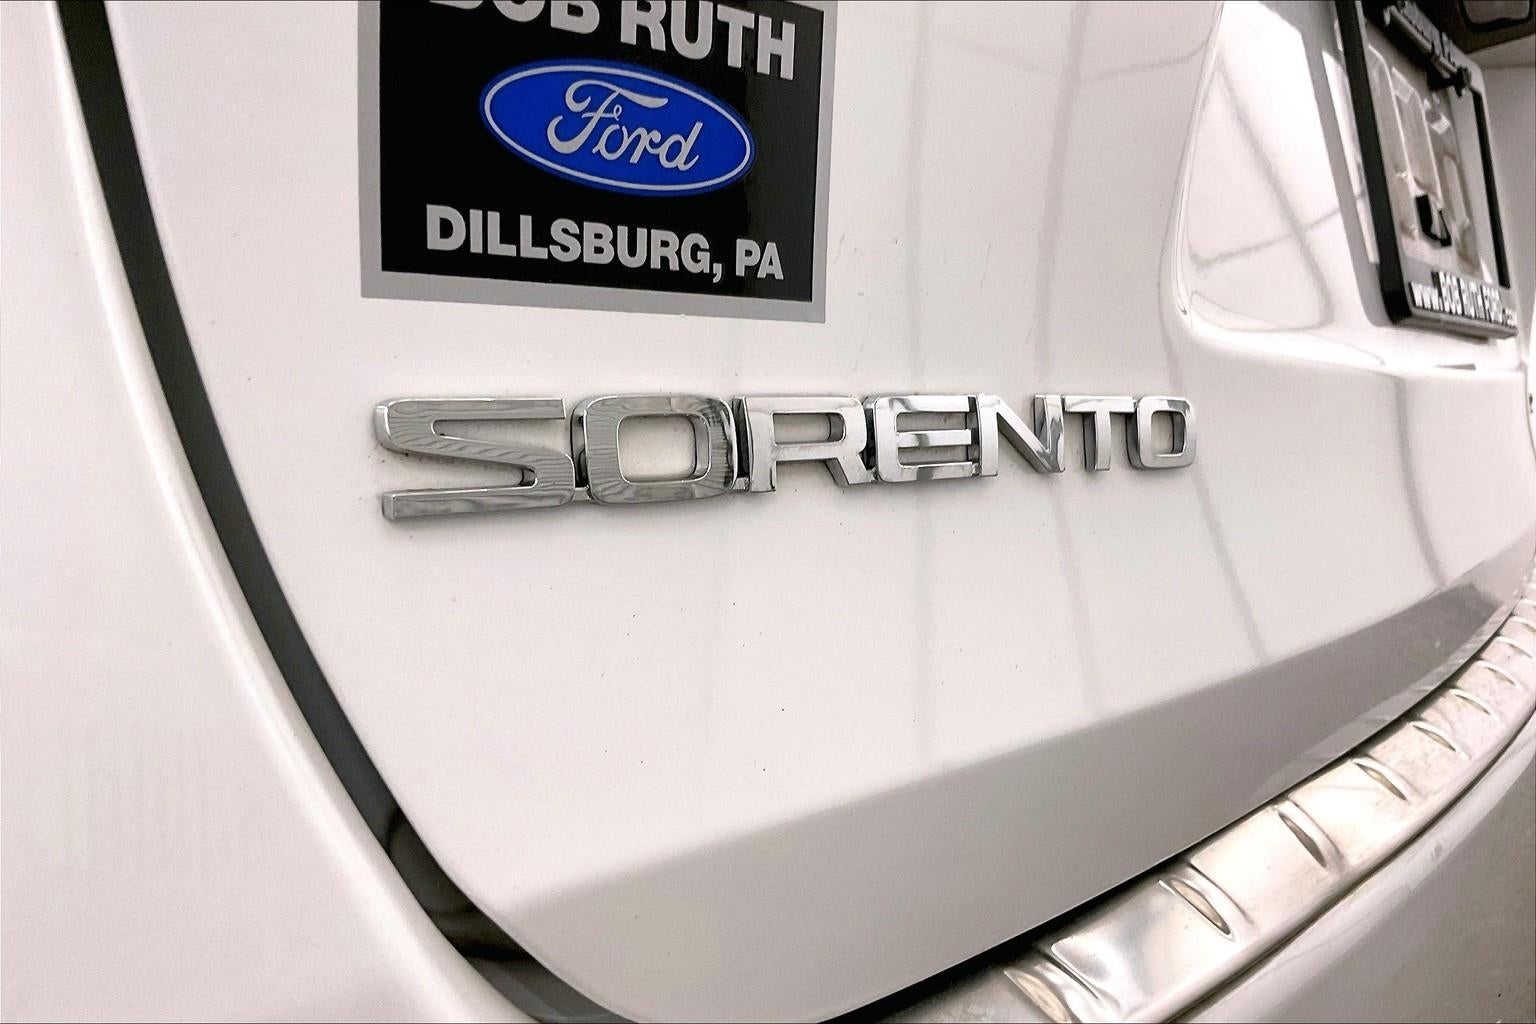 2018 Kia Sorento SX V6